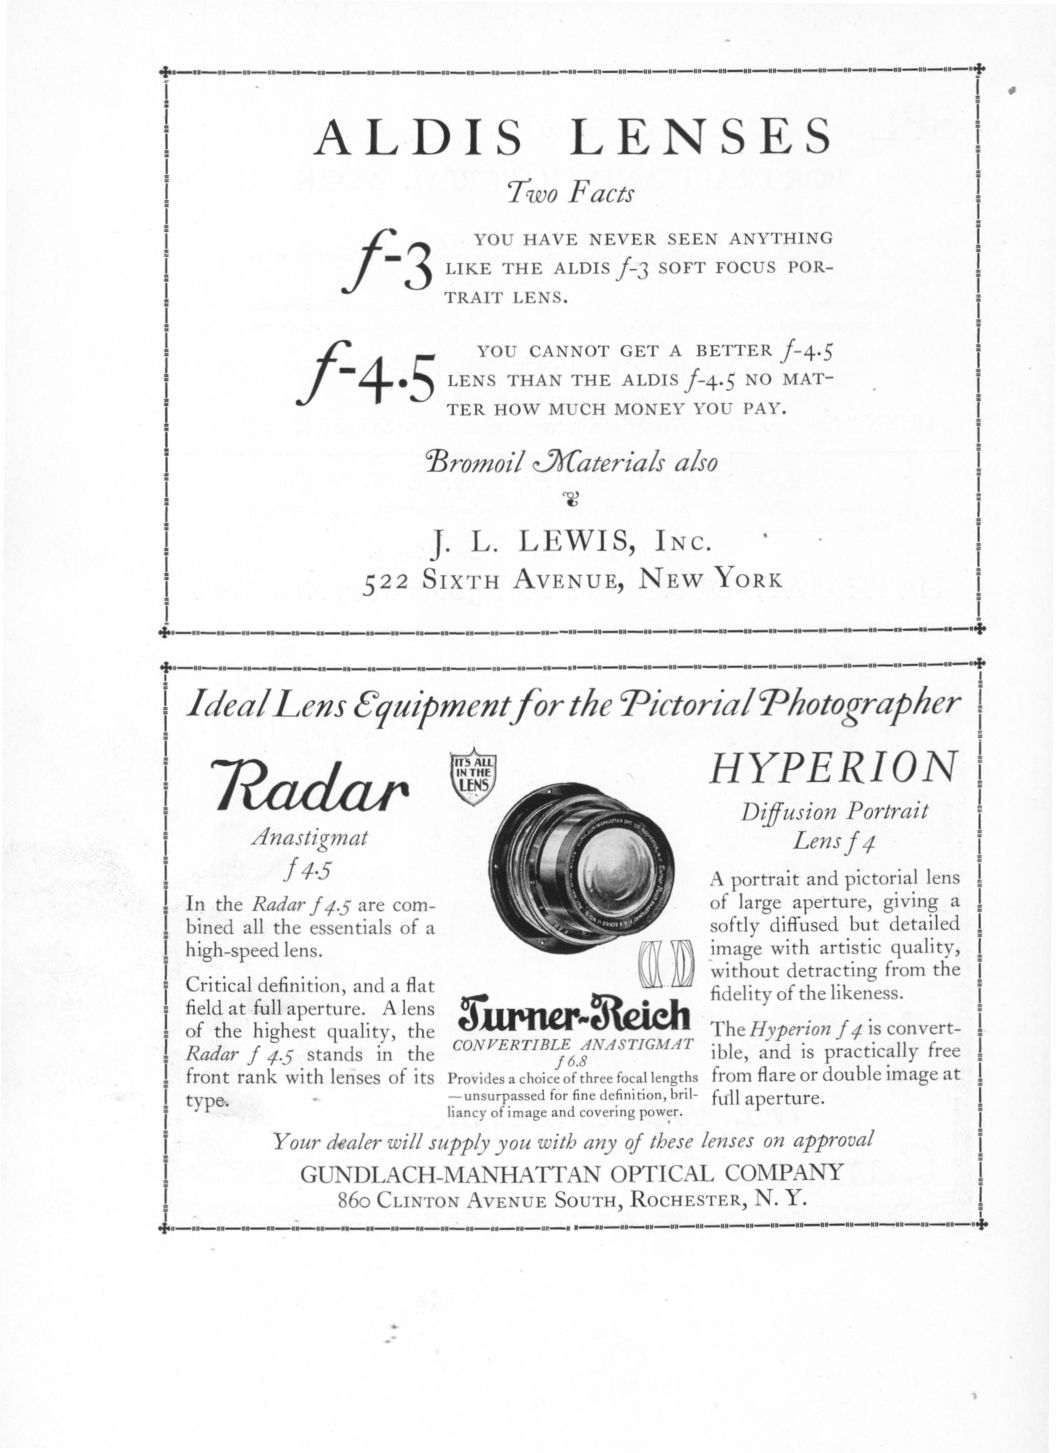 Advertisements: J. L. Lewis, Inc., Gundlach-Manhattan Optical Company